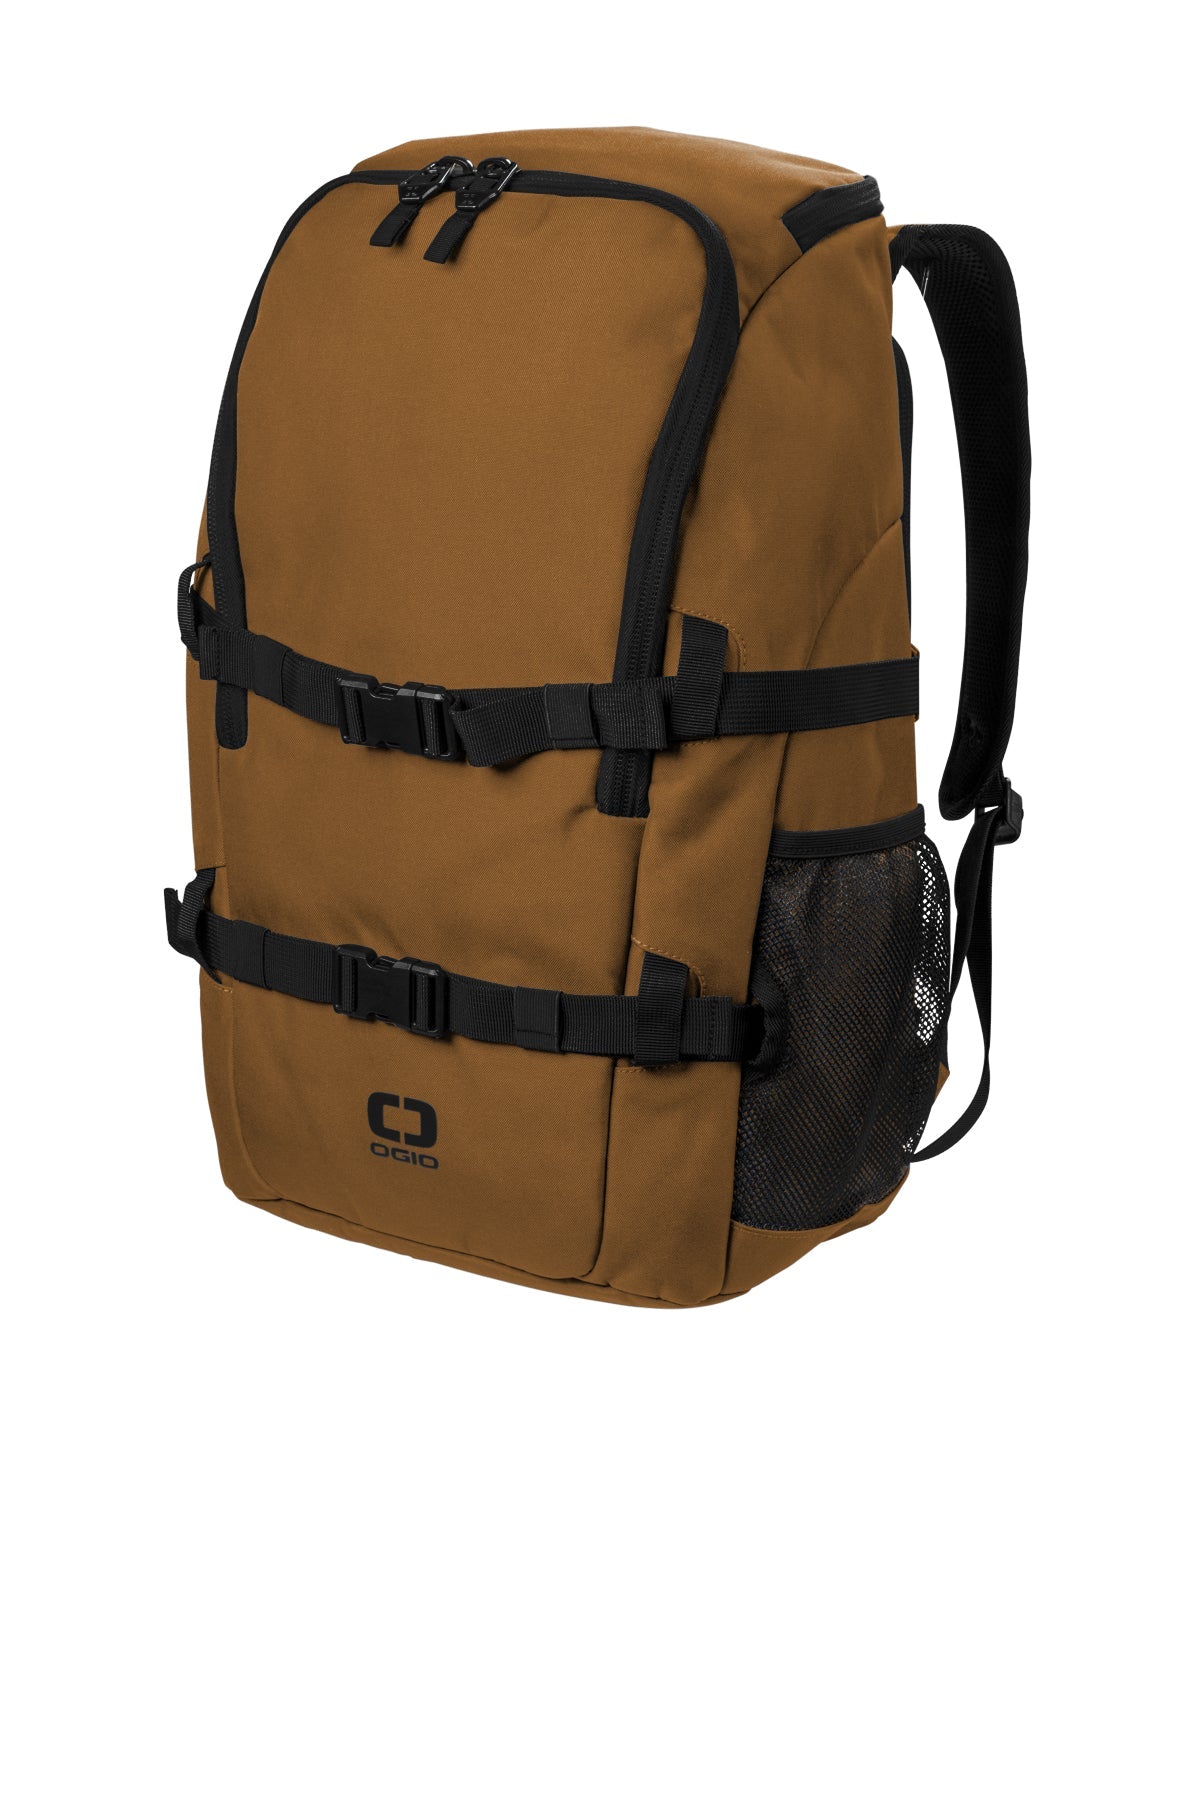 OGIO Street Customzied Backpacks, Duck Brown